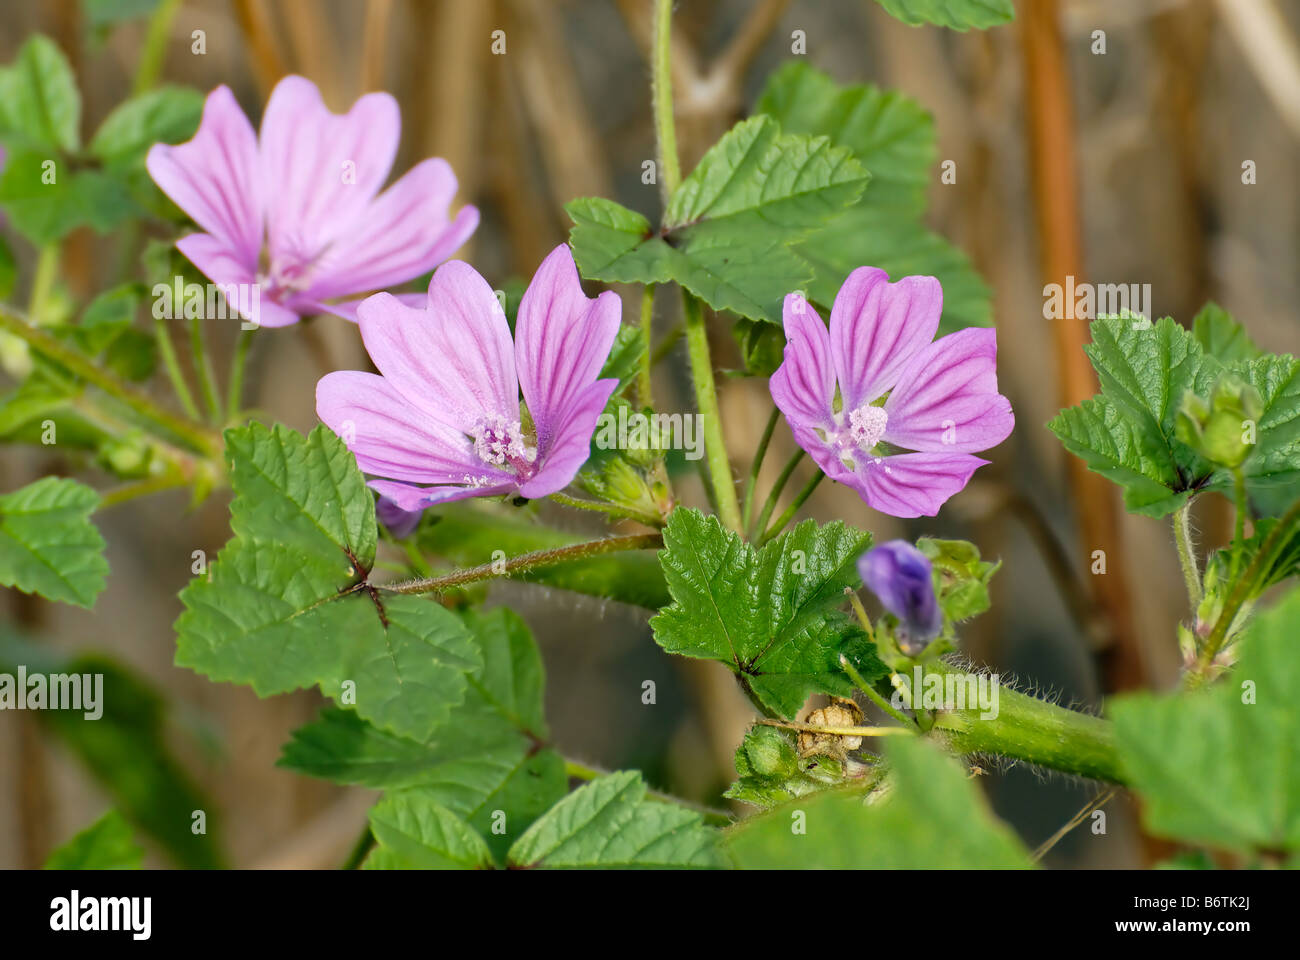 A close up picture of a Wild Geranium Geranium maculatum flower Stock Photo